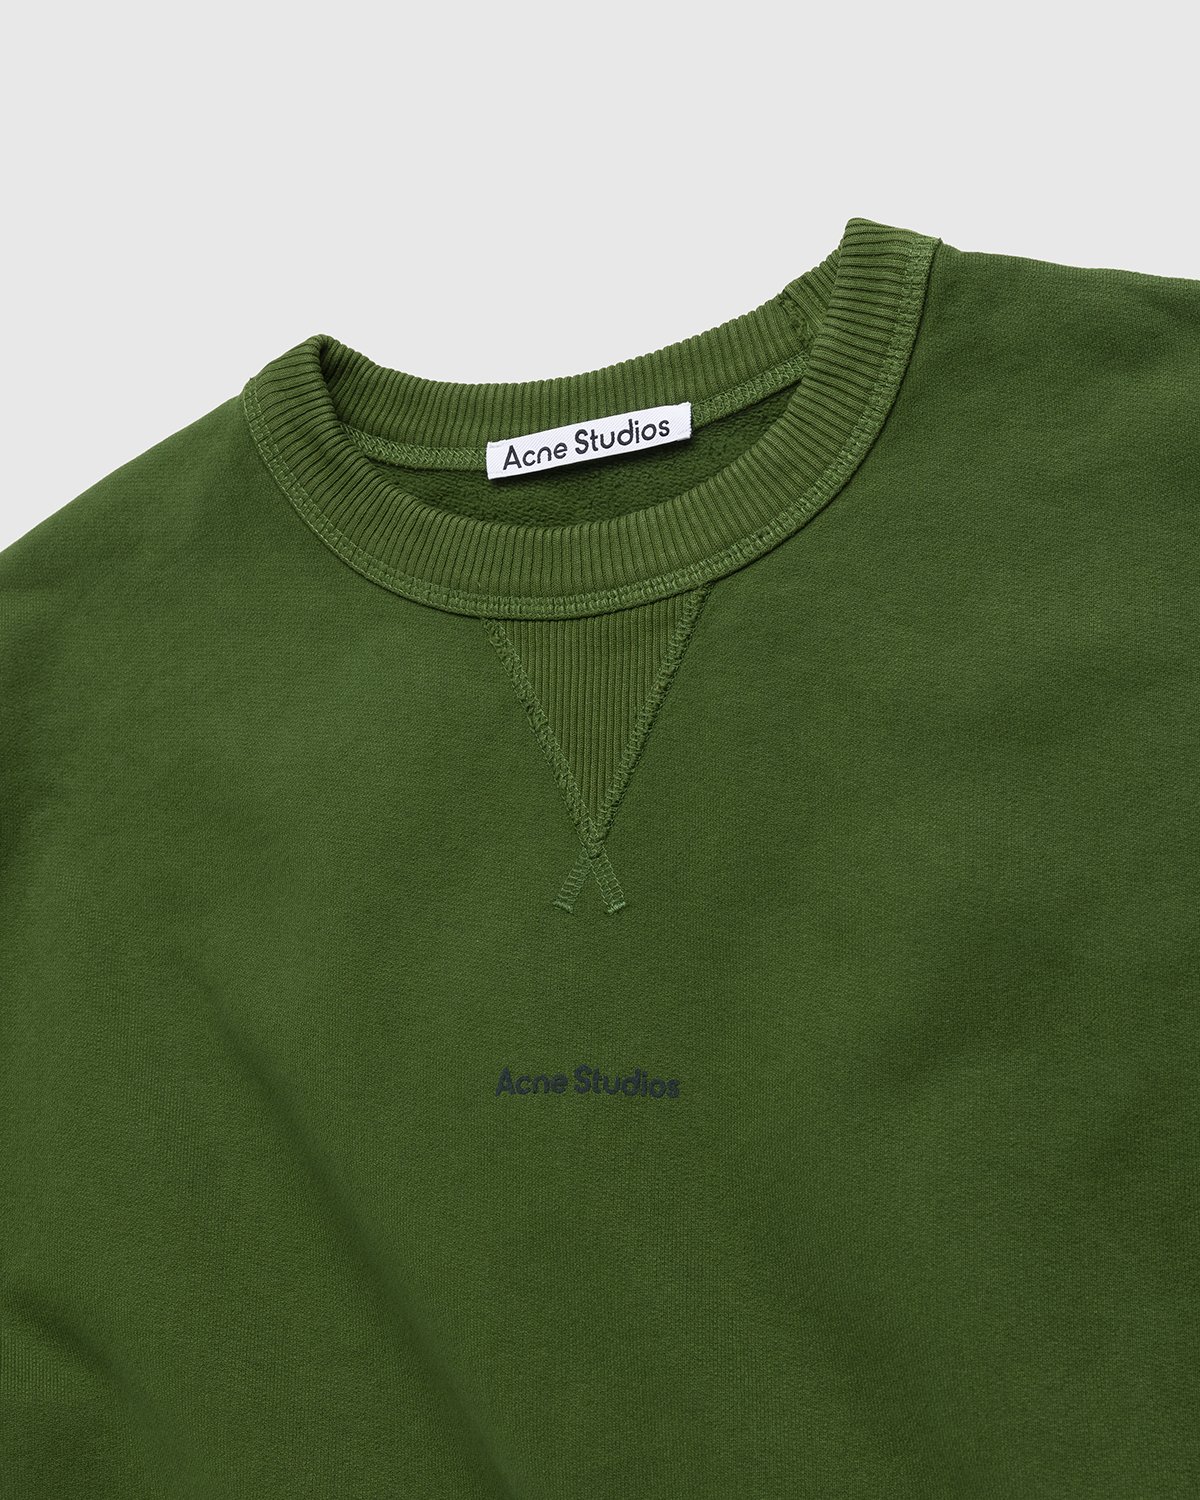 Acne Studios - Organic Cotton Crewneck Sweatshirt Bottle Green - Clothing - Green - Image 4